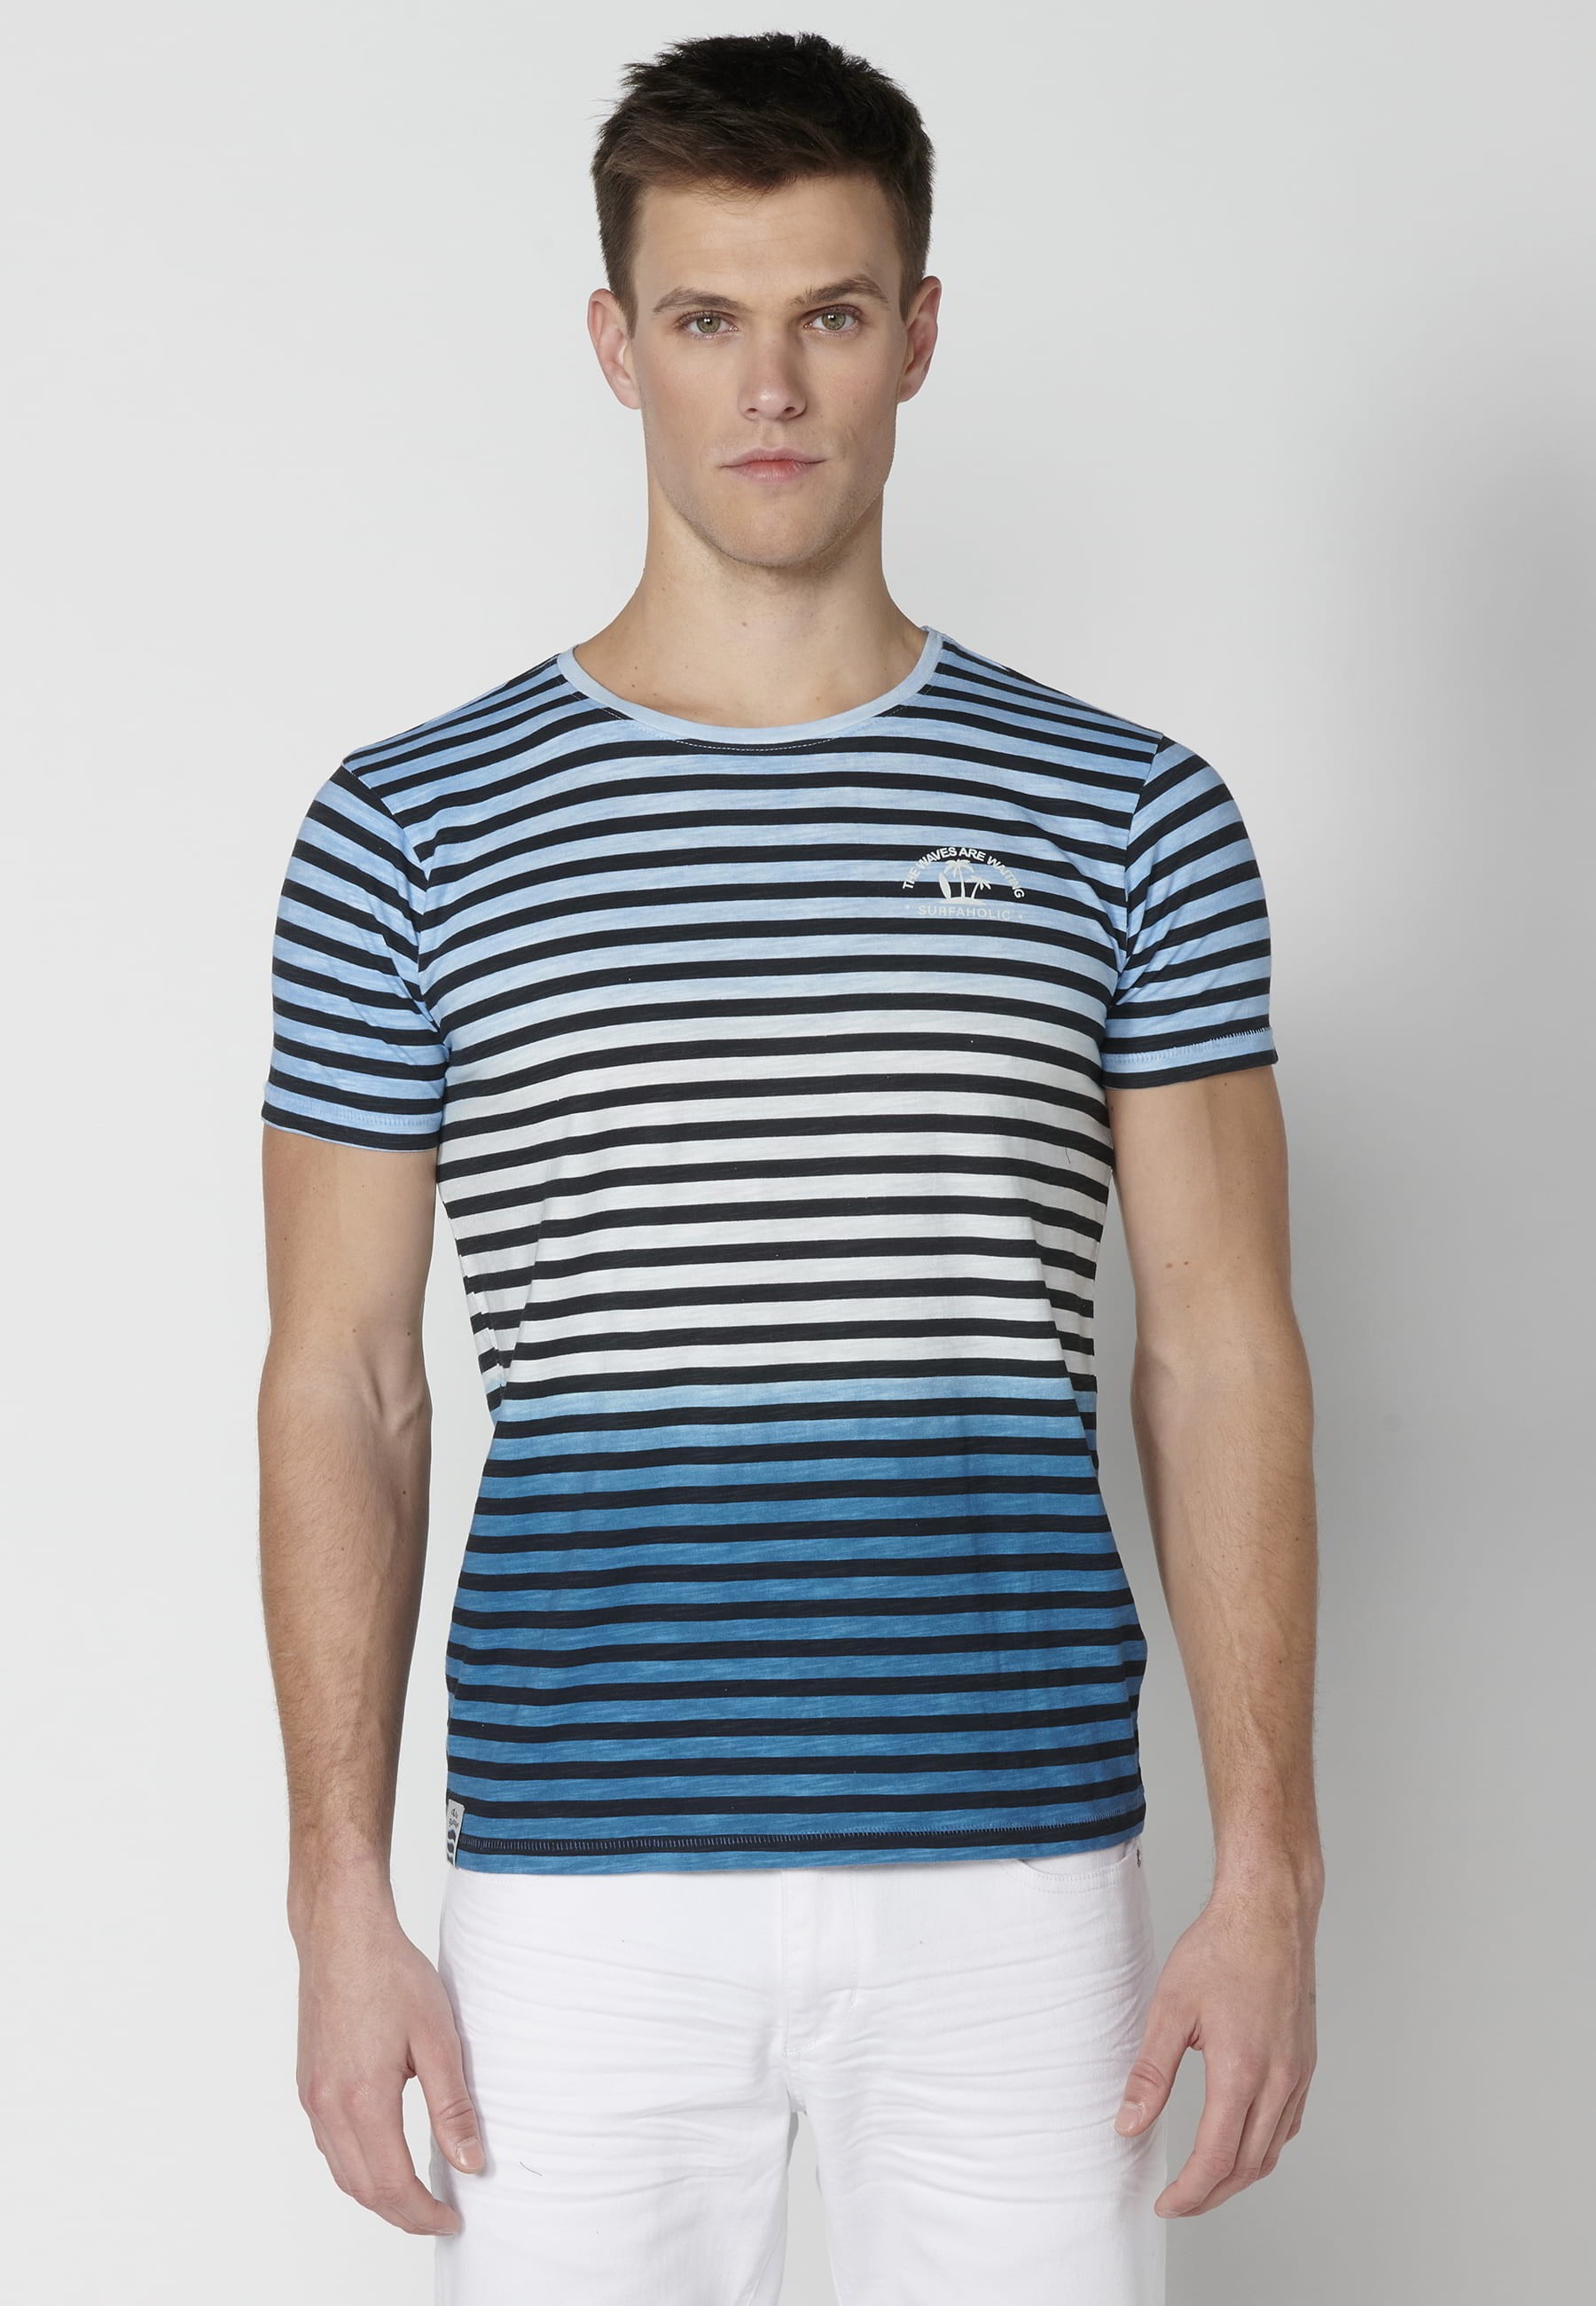 Short-sleeved Blue Cotton T-shirt for Men